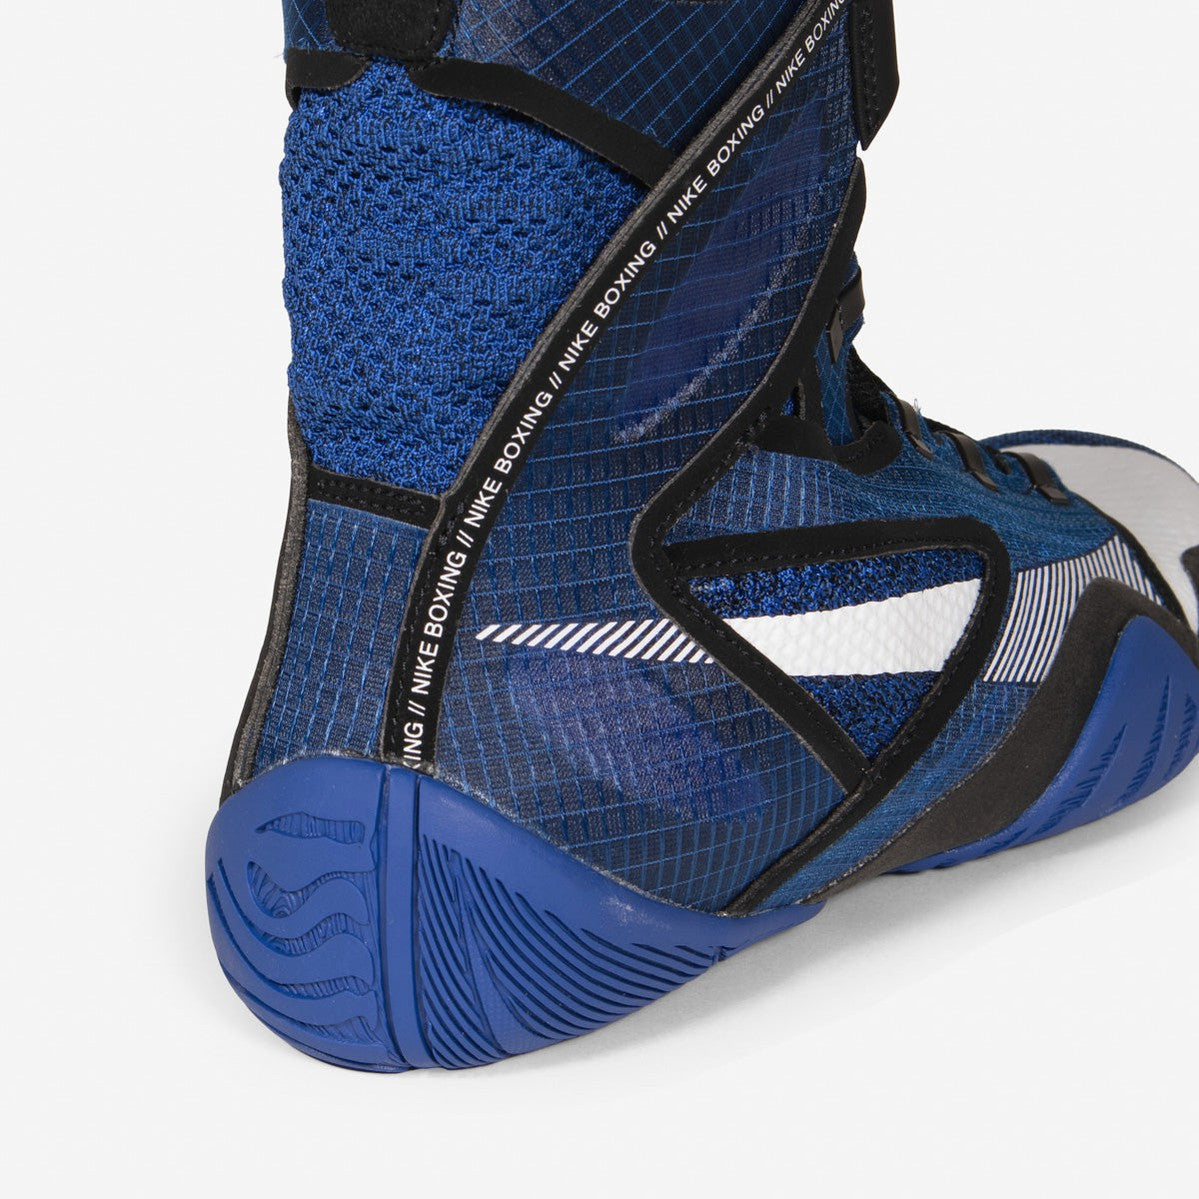 Buty Bokserskie Nike Hyperko 2.0 Niebieski